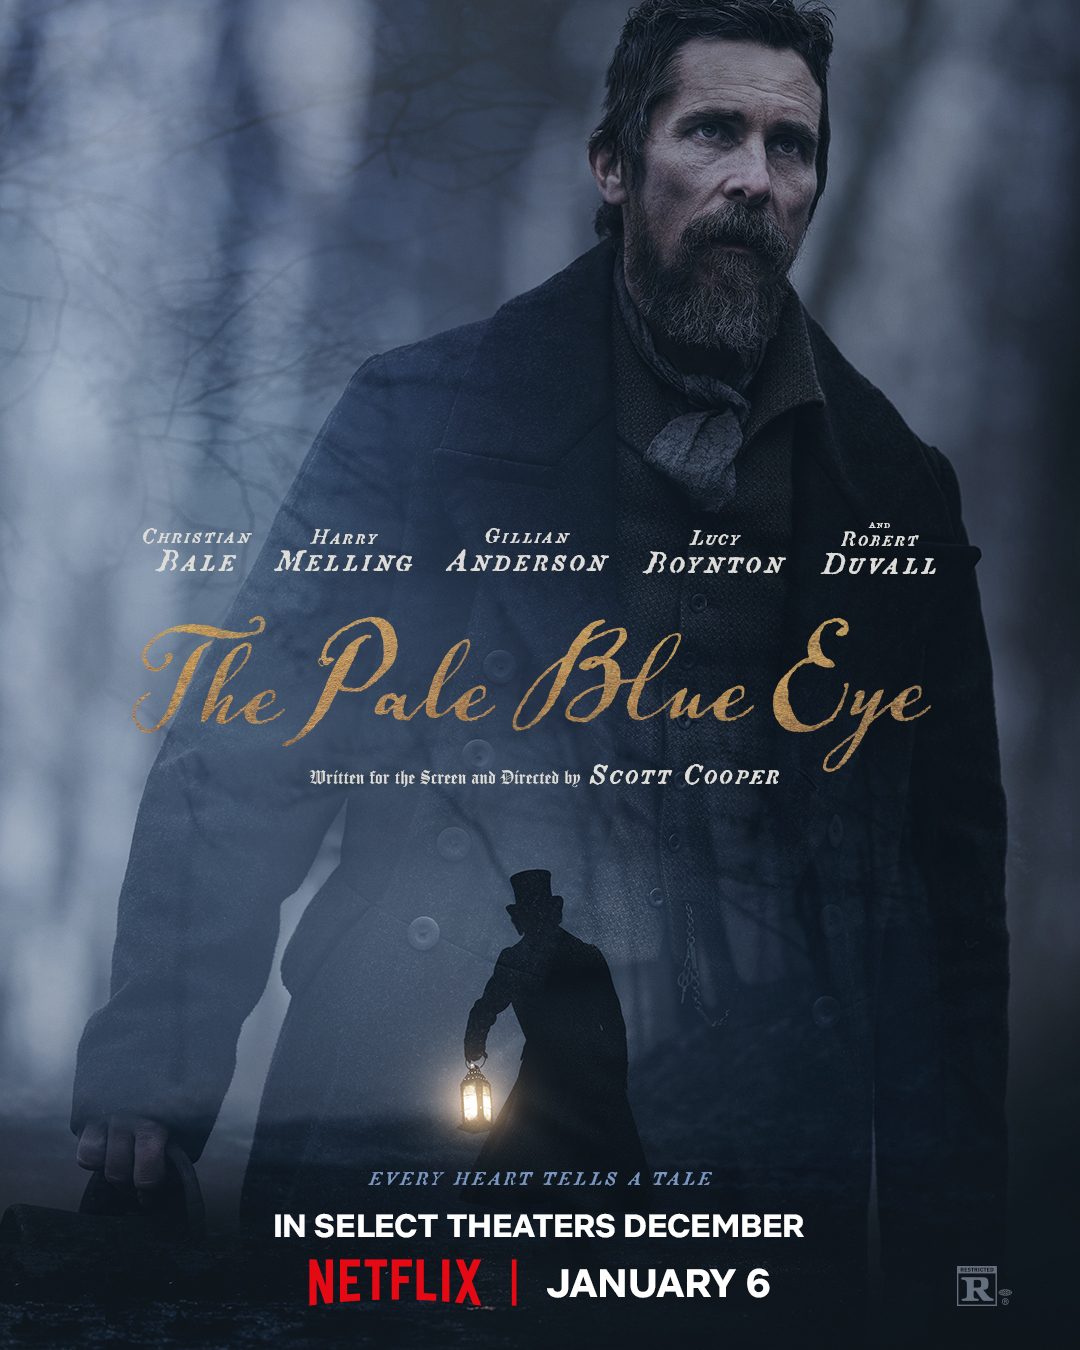 Christian Bale in The Pale Blue Eye poster op Netflix België